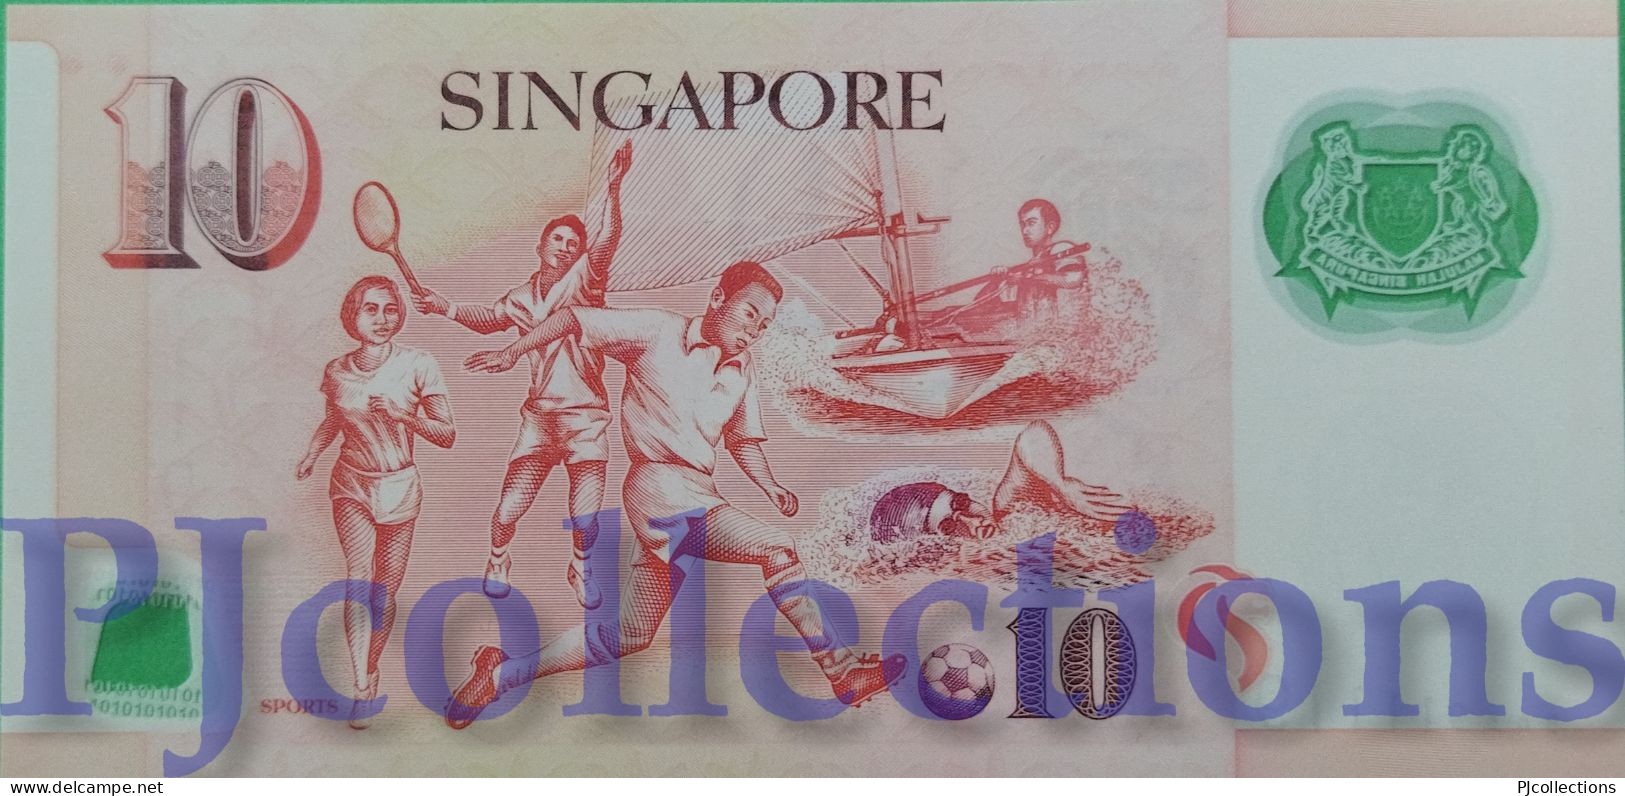 SINGAPORE 10 DOLLARS 2005 PICK 48a POLYMER UNC GOOD SERIAL NUMBER "9AA 911119" - Singapur